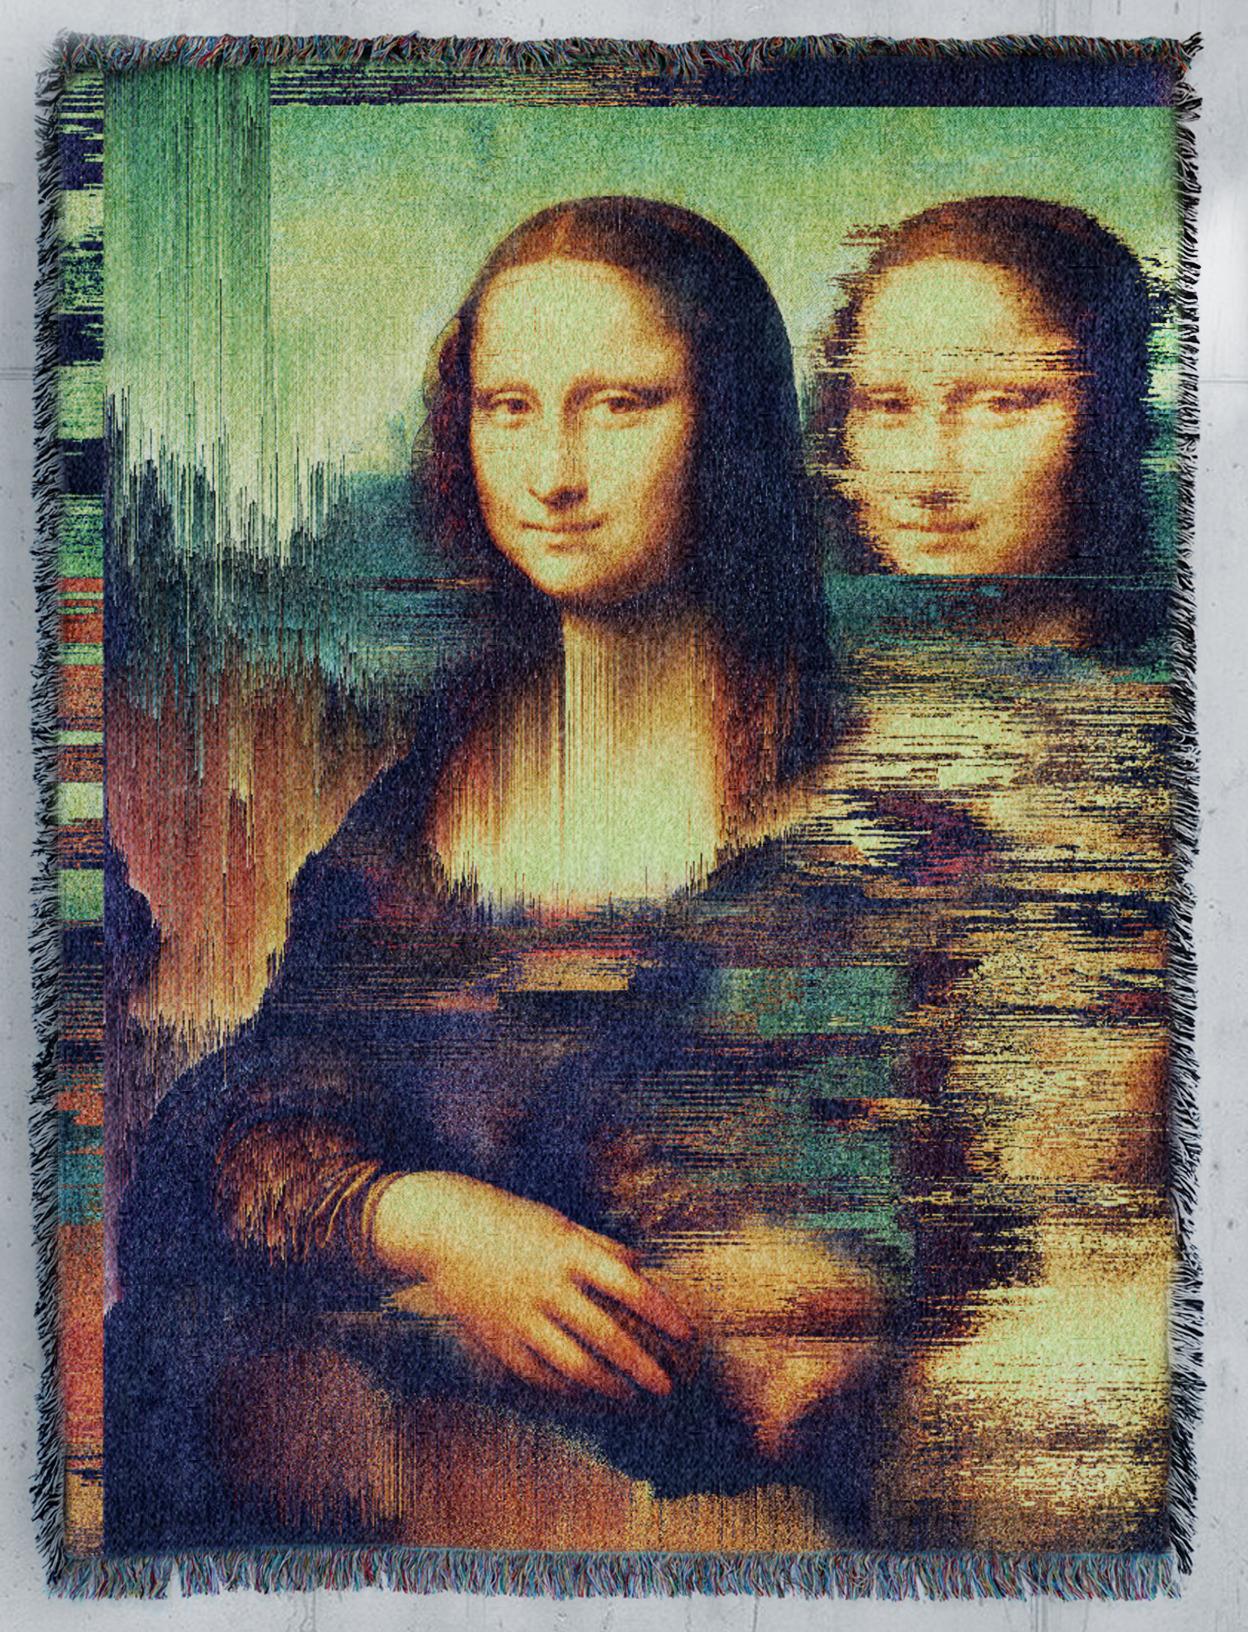 Souvenirs de La gioconda de Leonardo Da Vinci par Marco Salvi - Print de Unknown